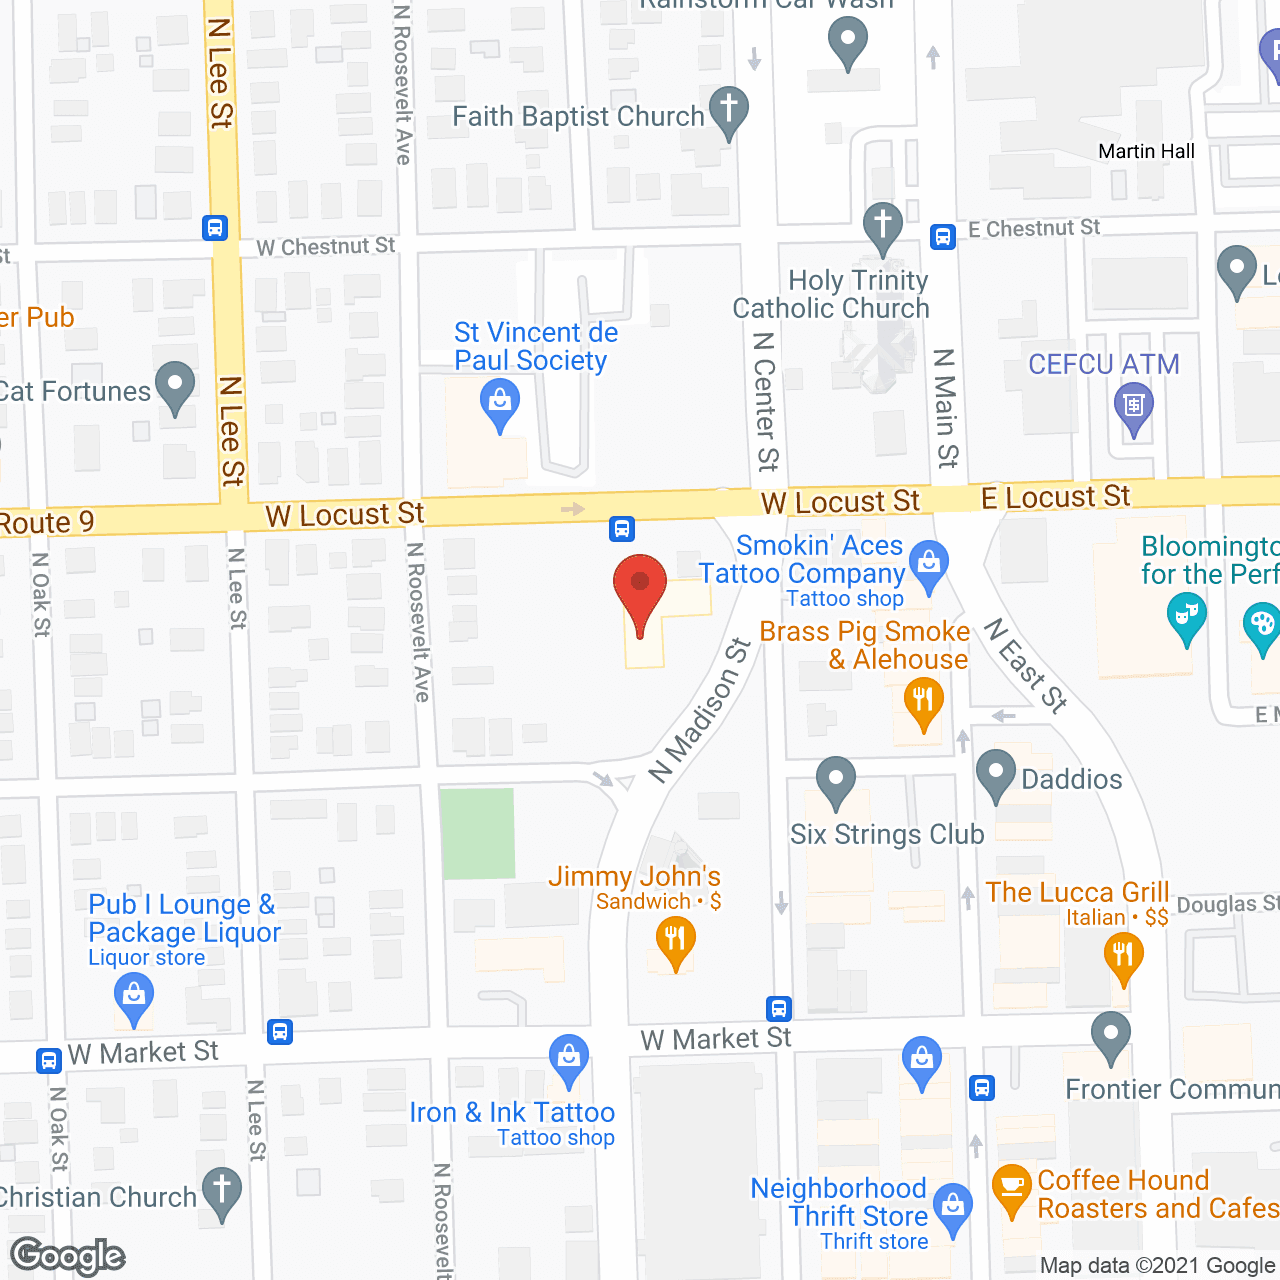 Phoenix Towers in google map